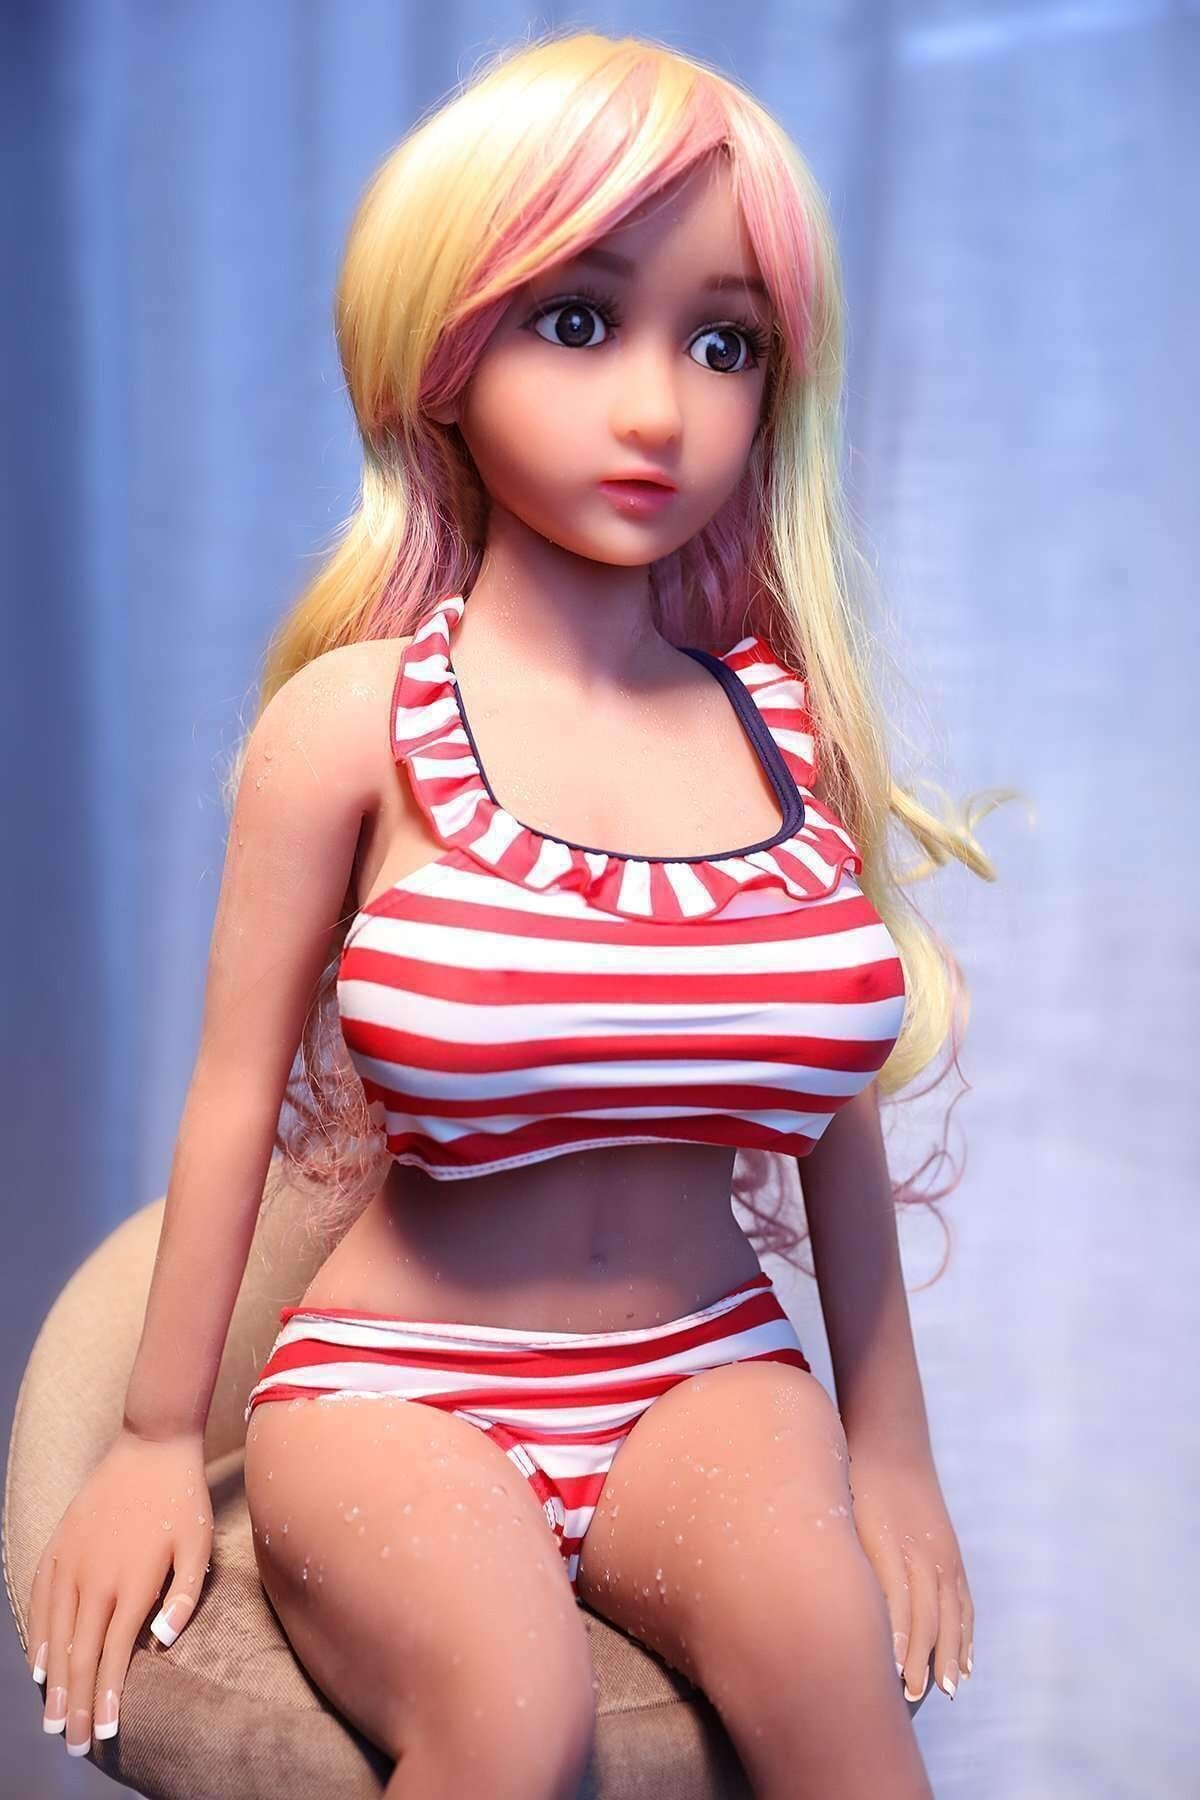 105cm Silicone Sex Doll Big Breast Mini Vagina Adult Sexy Dolls